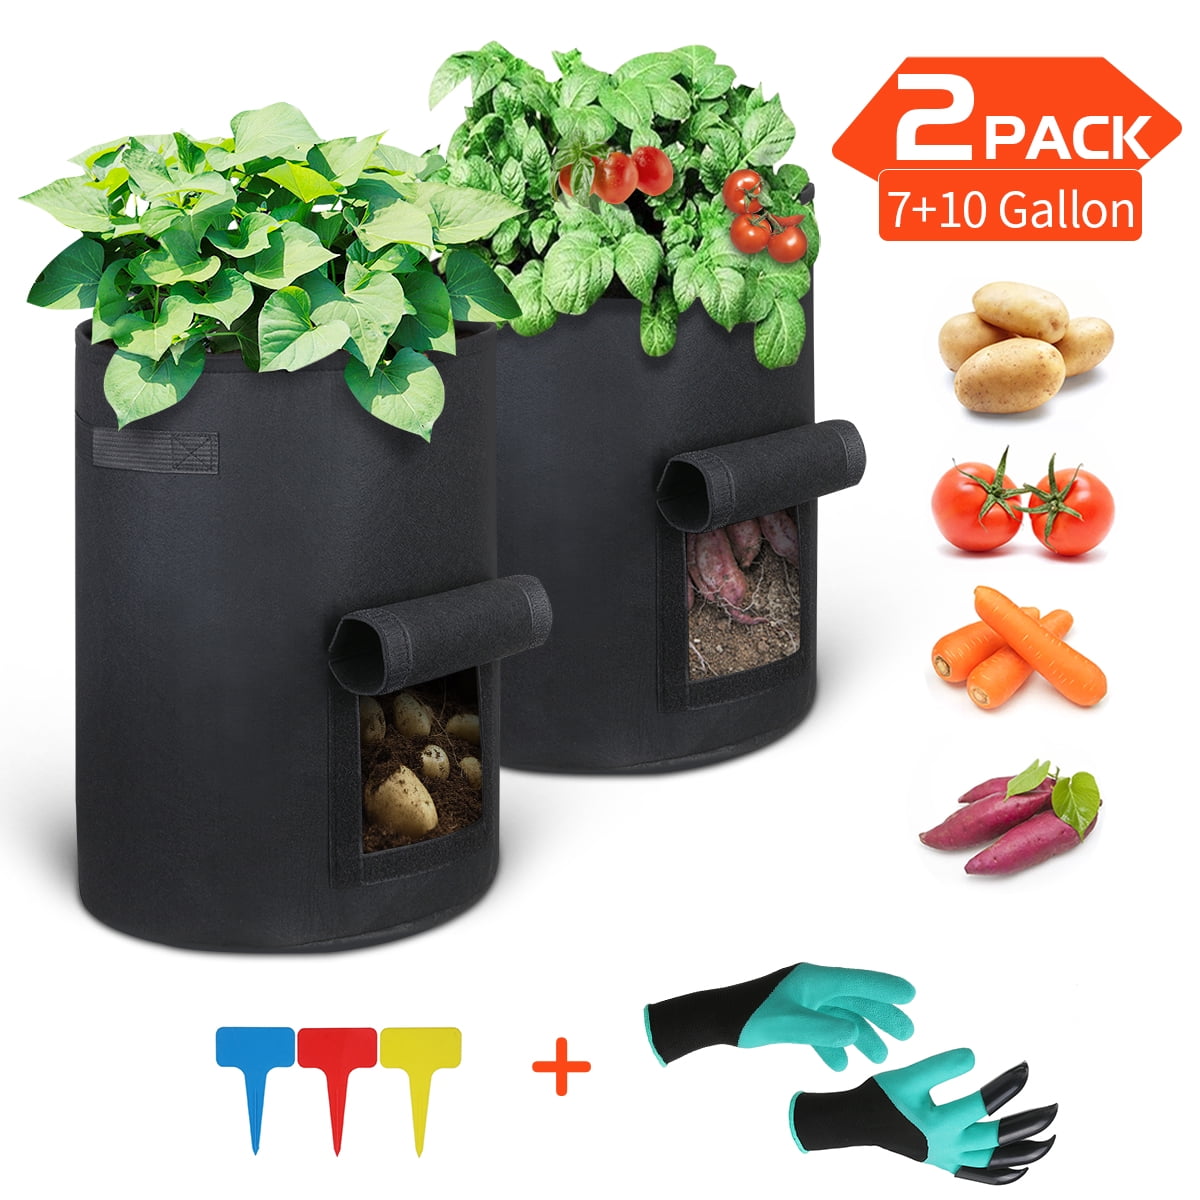 50pcs 5 Gallon Plant Bags Grow Bags Aeration Fabric Pots Tree Pots Garden Pouch 